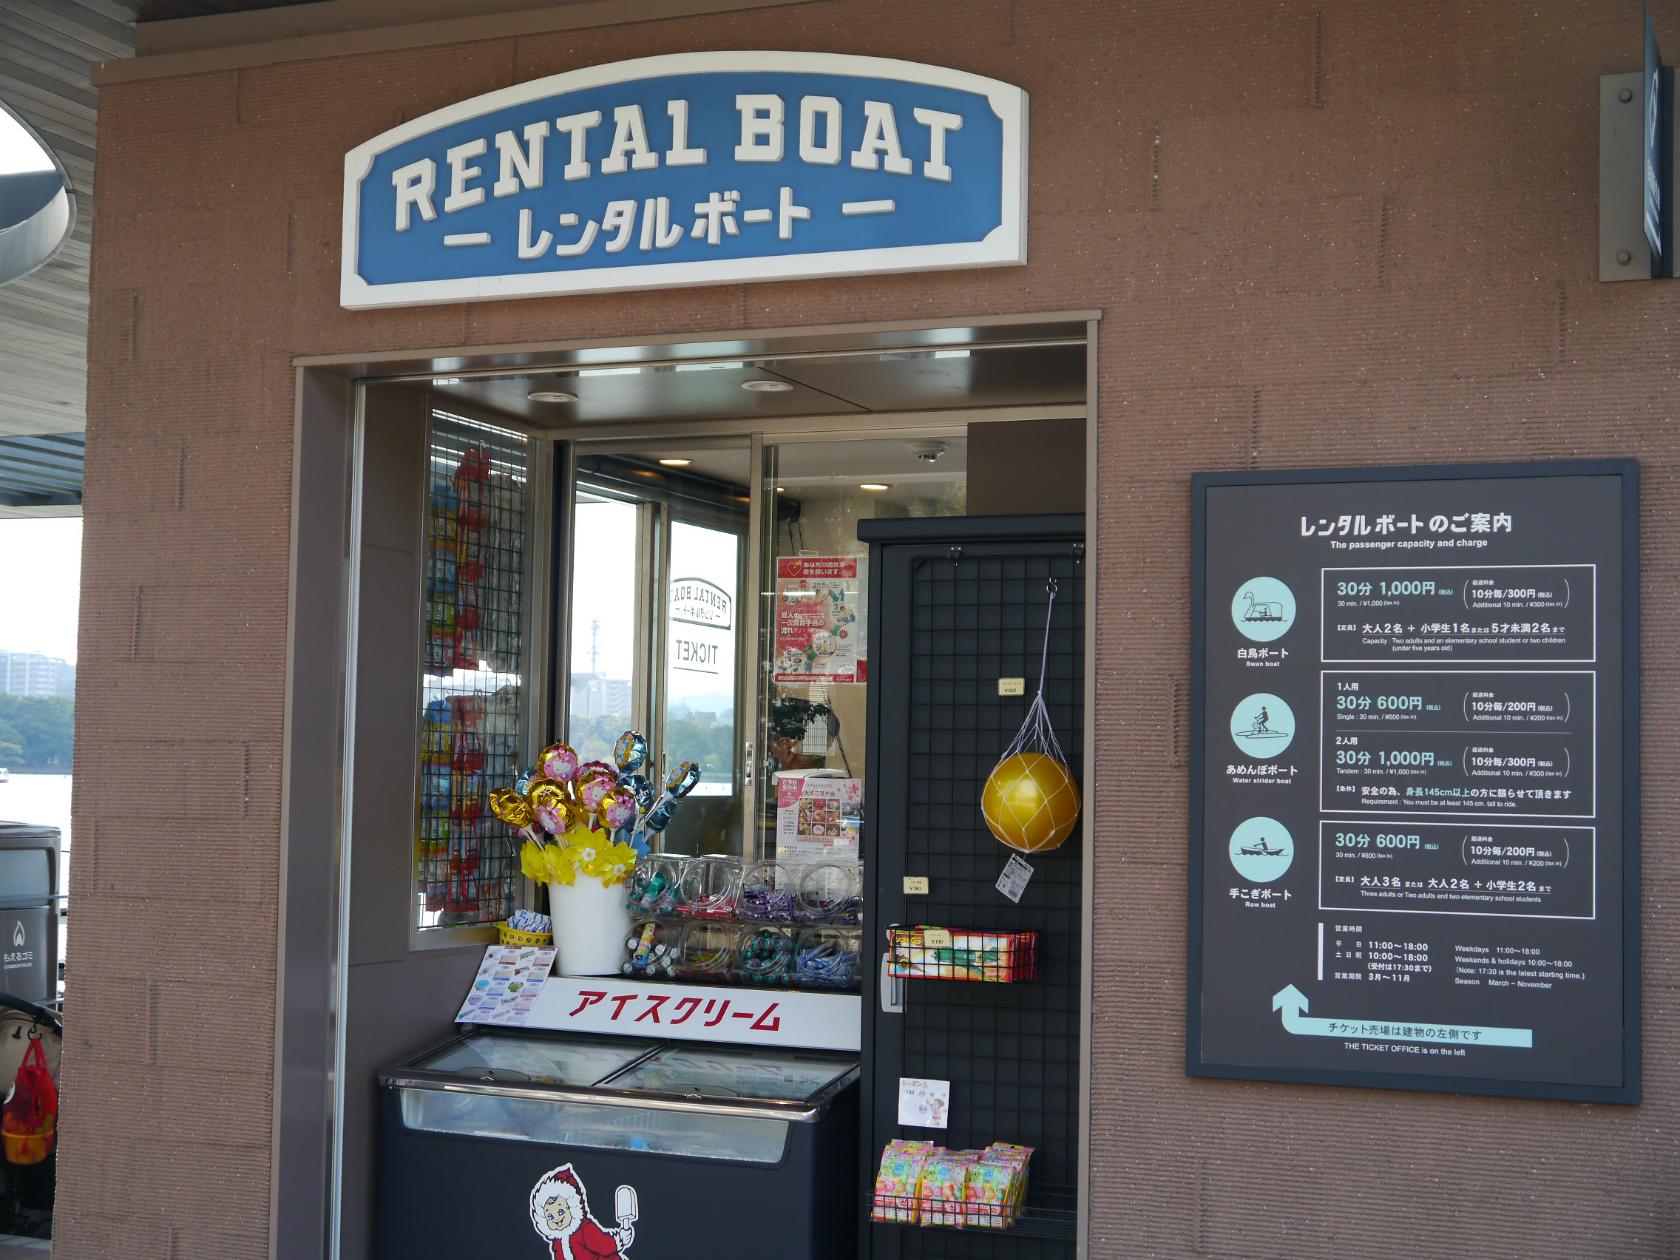 Park boat-1